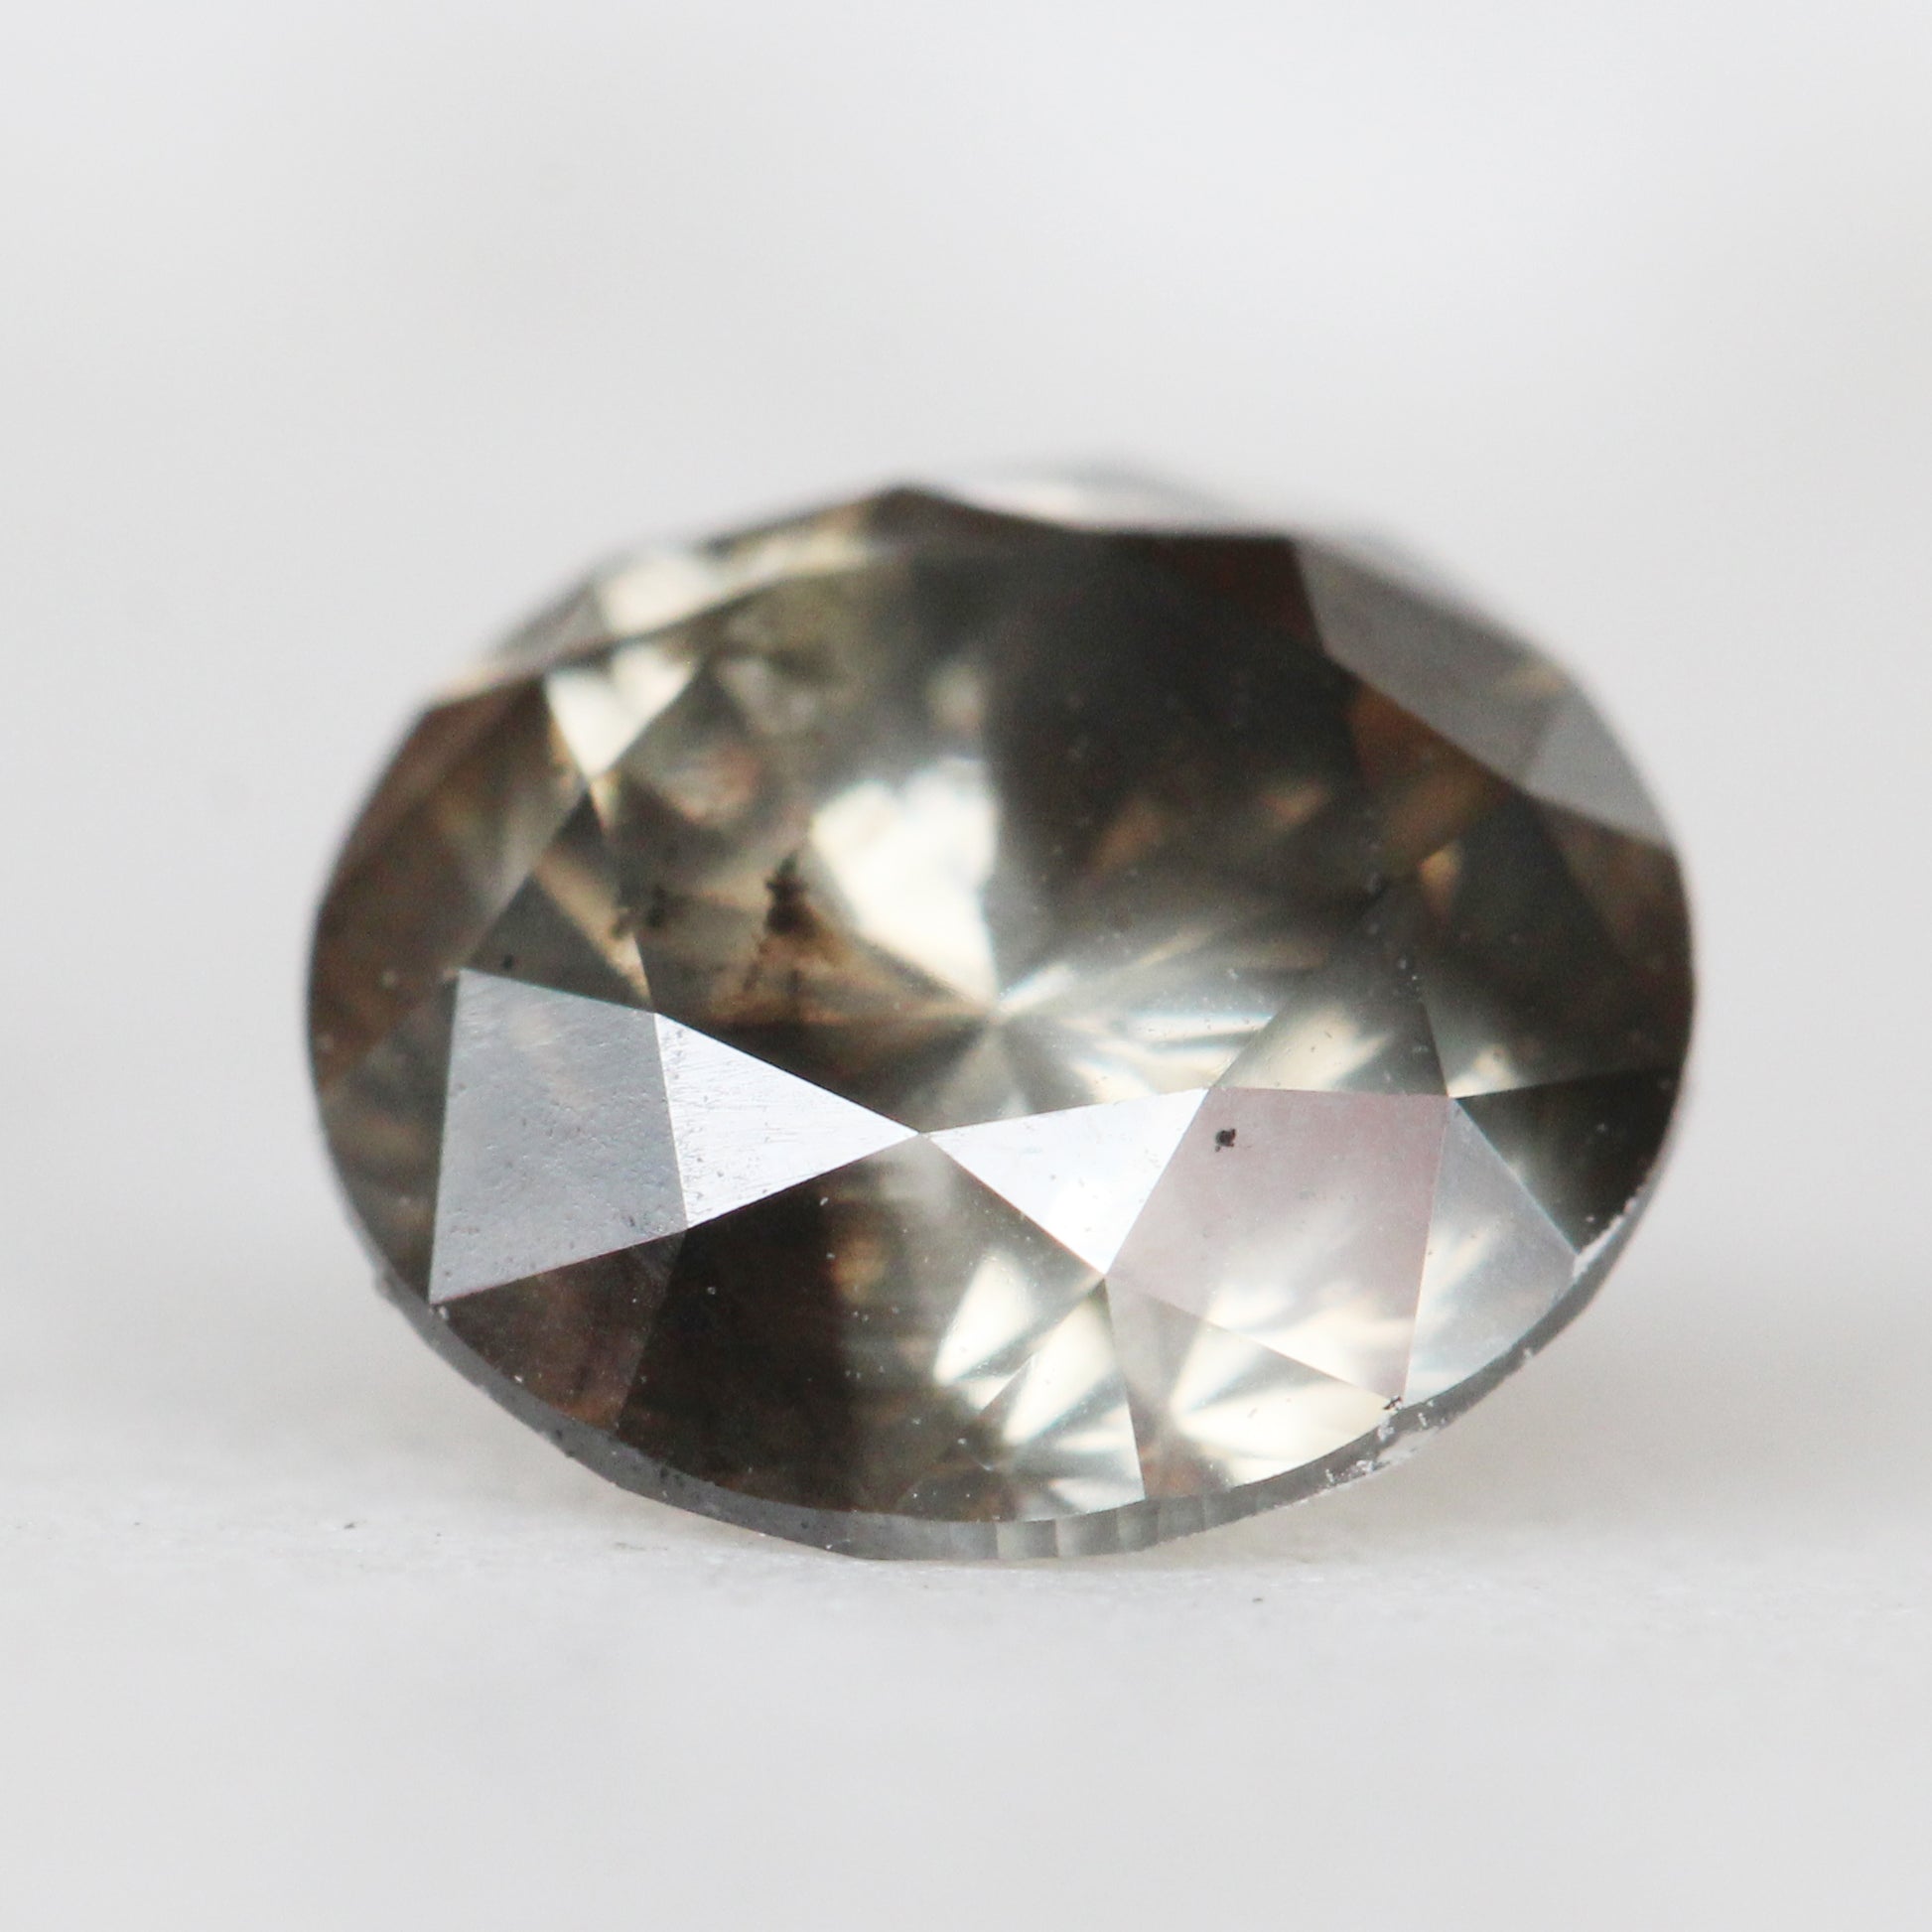 1.01 Carat RARE Round Diamond for Custom Work - Inventory Code RRD101 - Midwinter Co. Alternative Bridal Rings and Modern Fine Jewelry